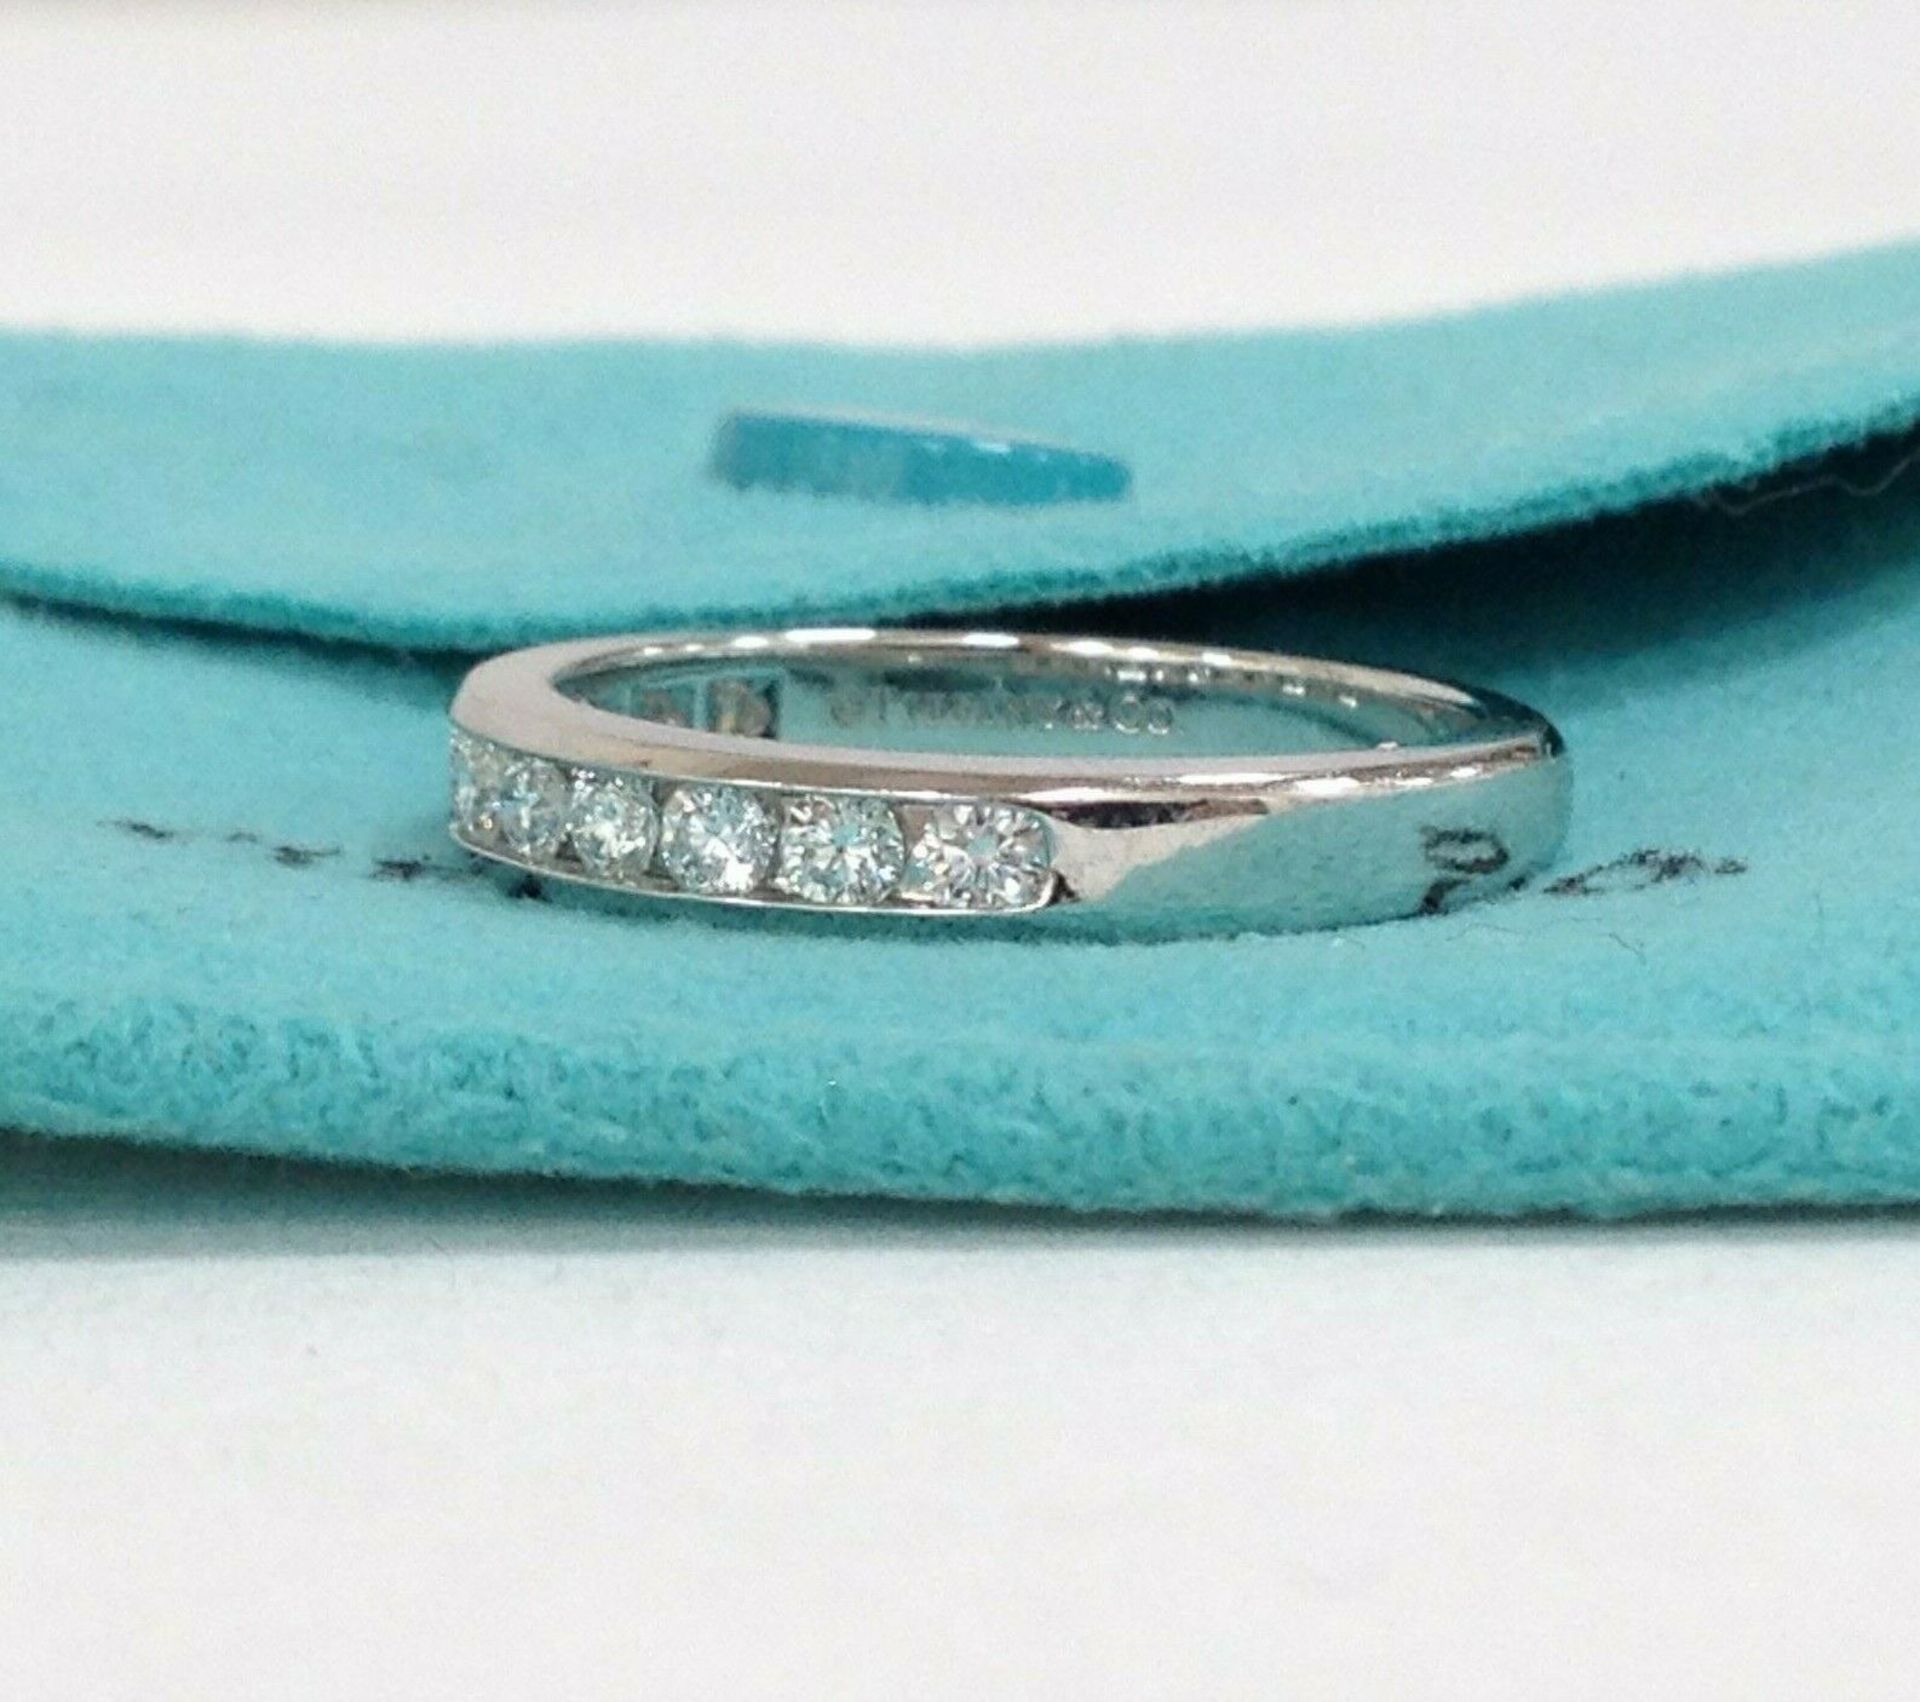 Tiffany & Co 950 Platinum Half Eternity 0.33 ctw Diamond Wedding Ring Band Size 5.75 - Image 6 of 6